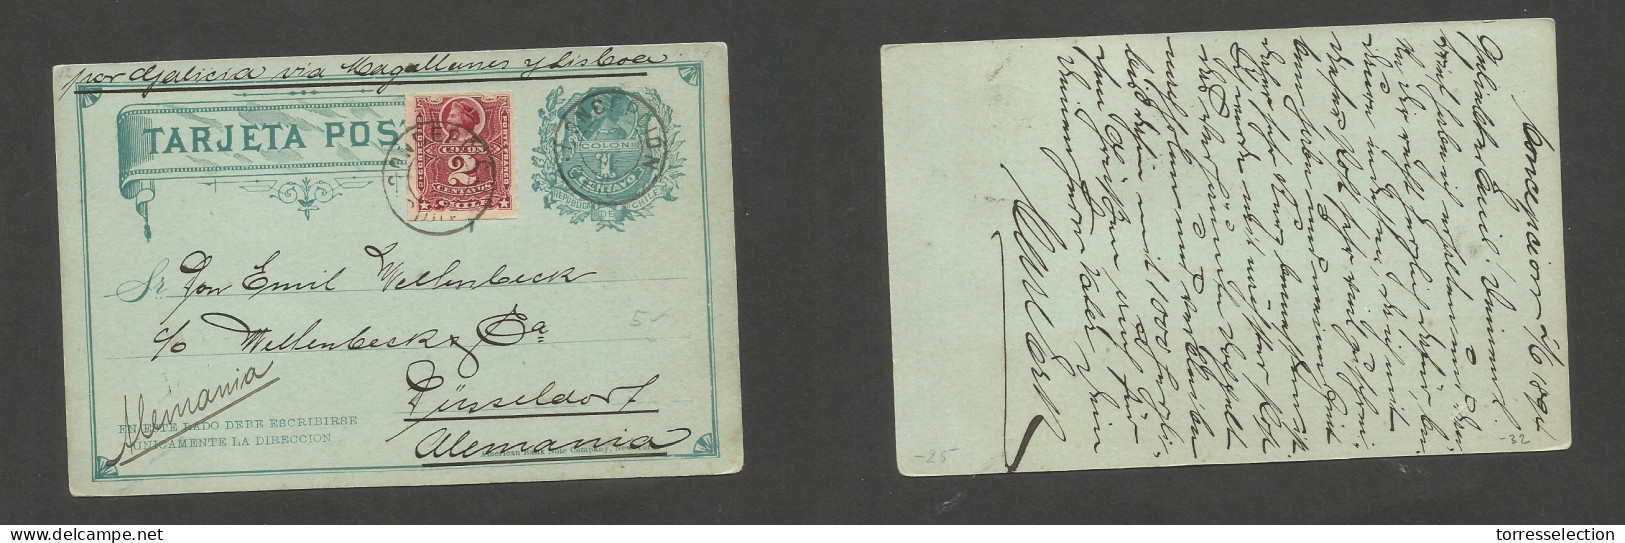 CHILE - Stationery. 1894 (2 June) Concepcion - Germany, Dusseldorf Por Galicia Via Magallanes - Lisboa. 1c Green Stat Ca - Chile